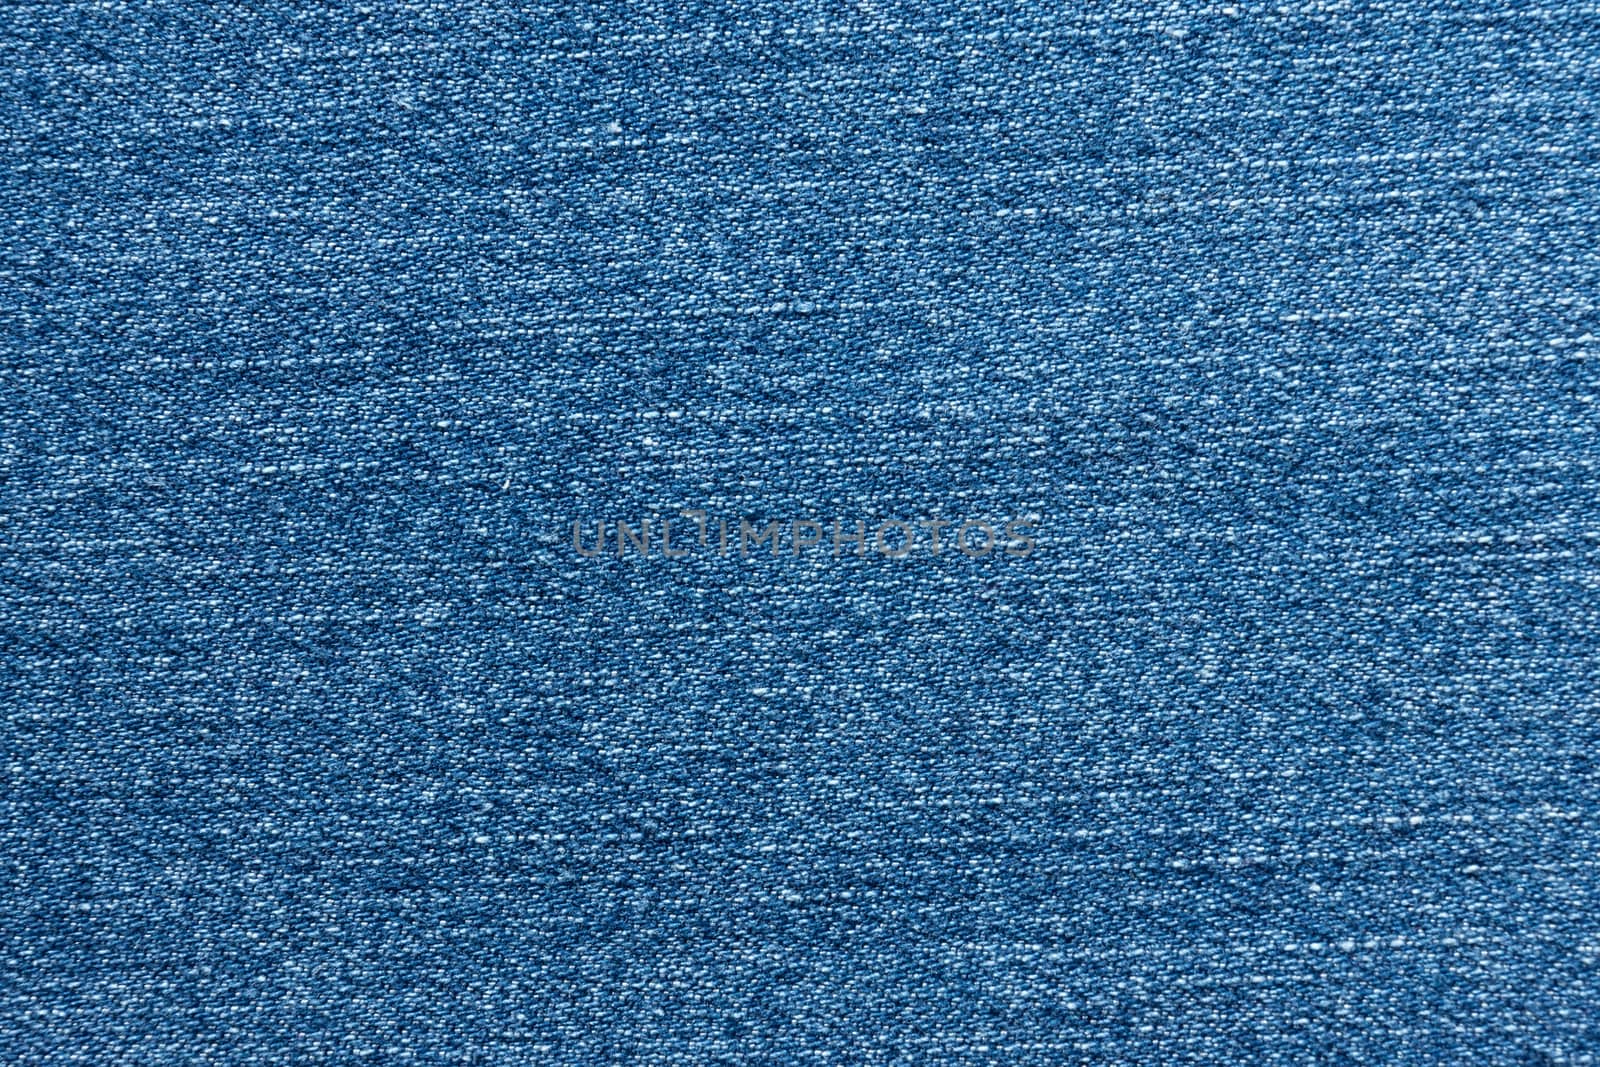 Texture of blue jeans by AlexBush